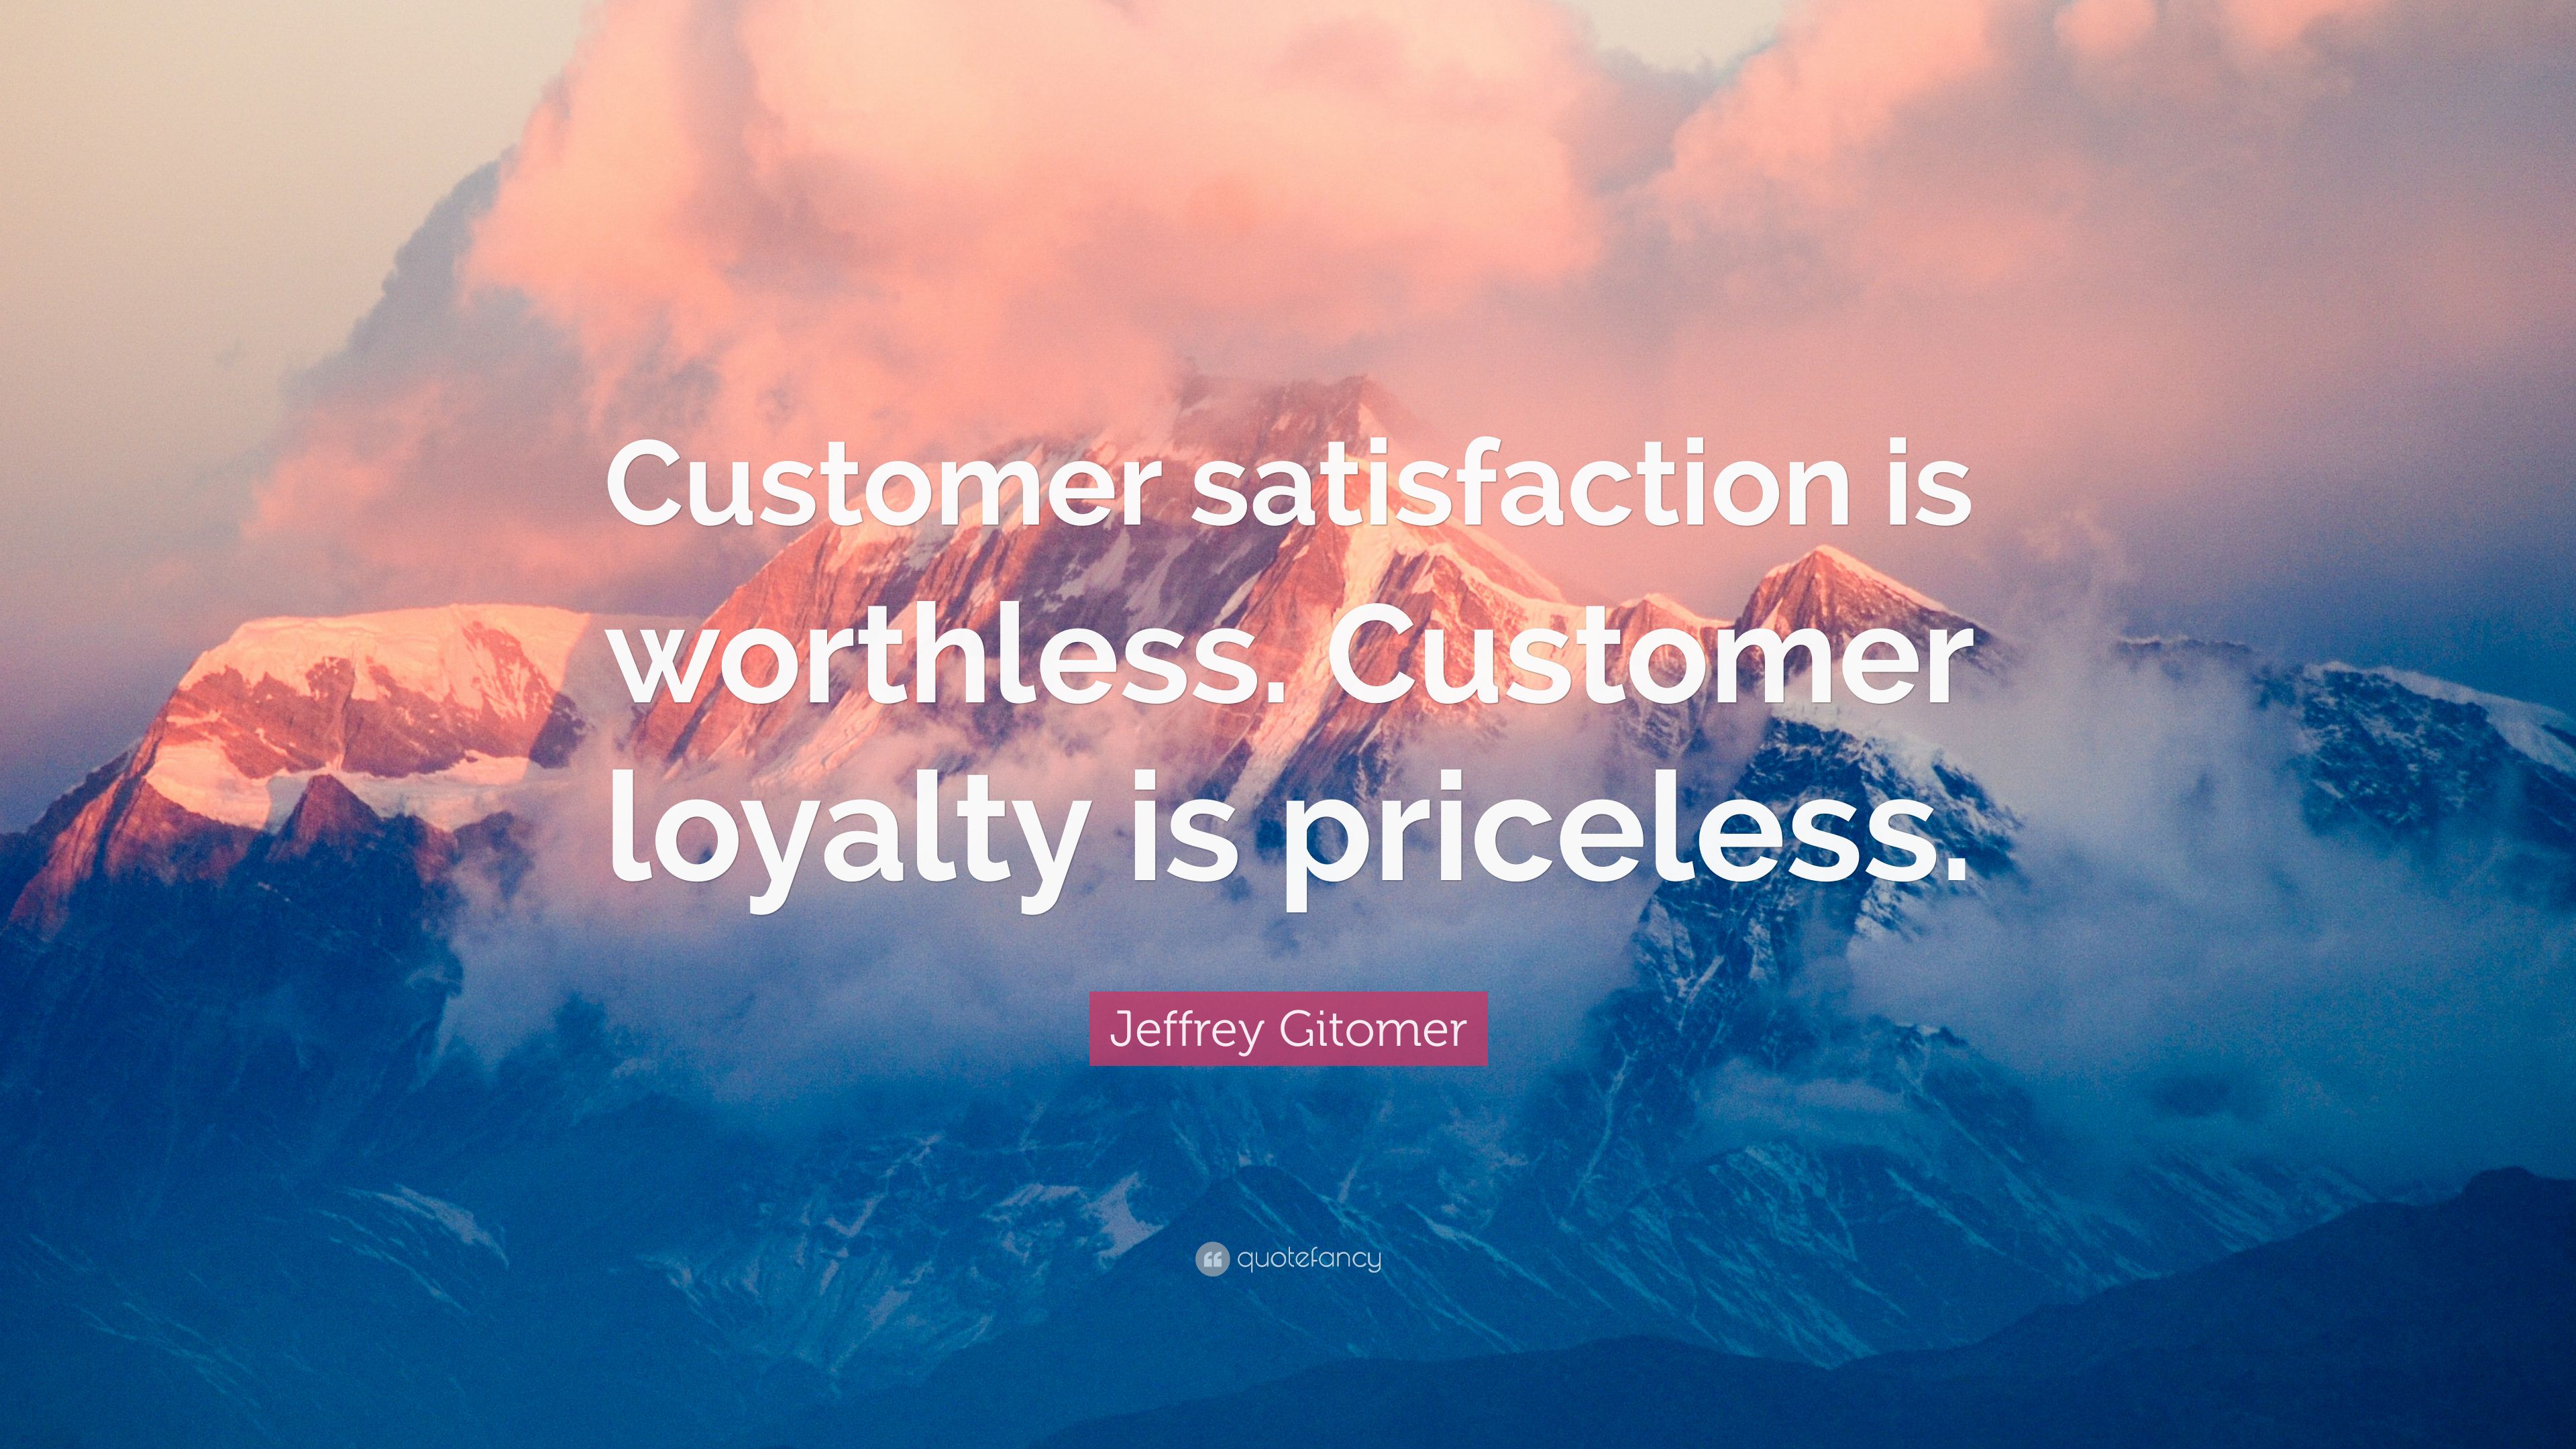 Jeffrey Gitomer Quote: “Customer satisfaction is worthless